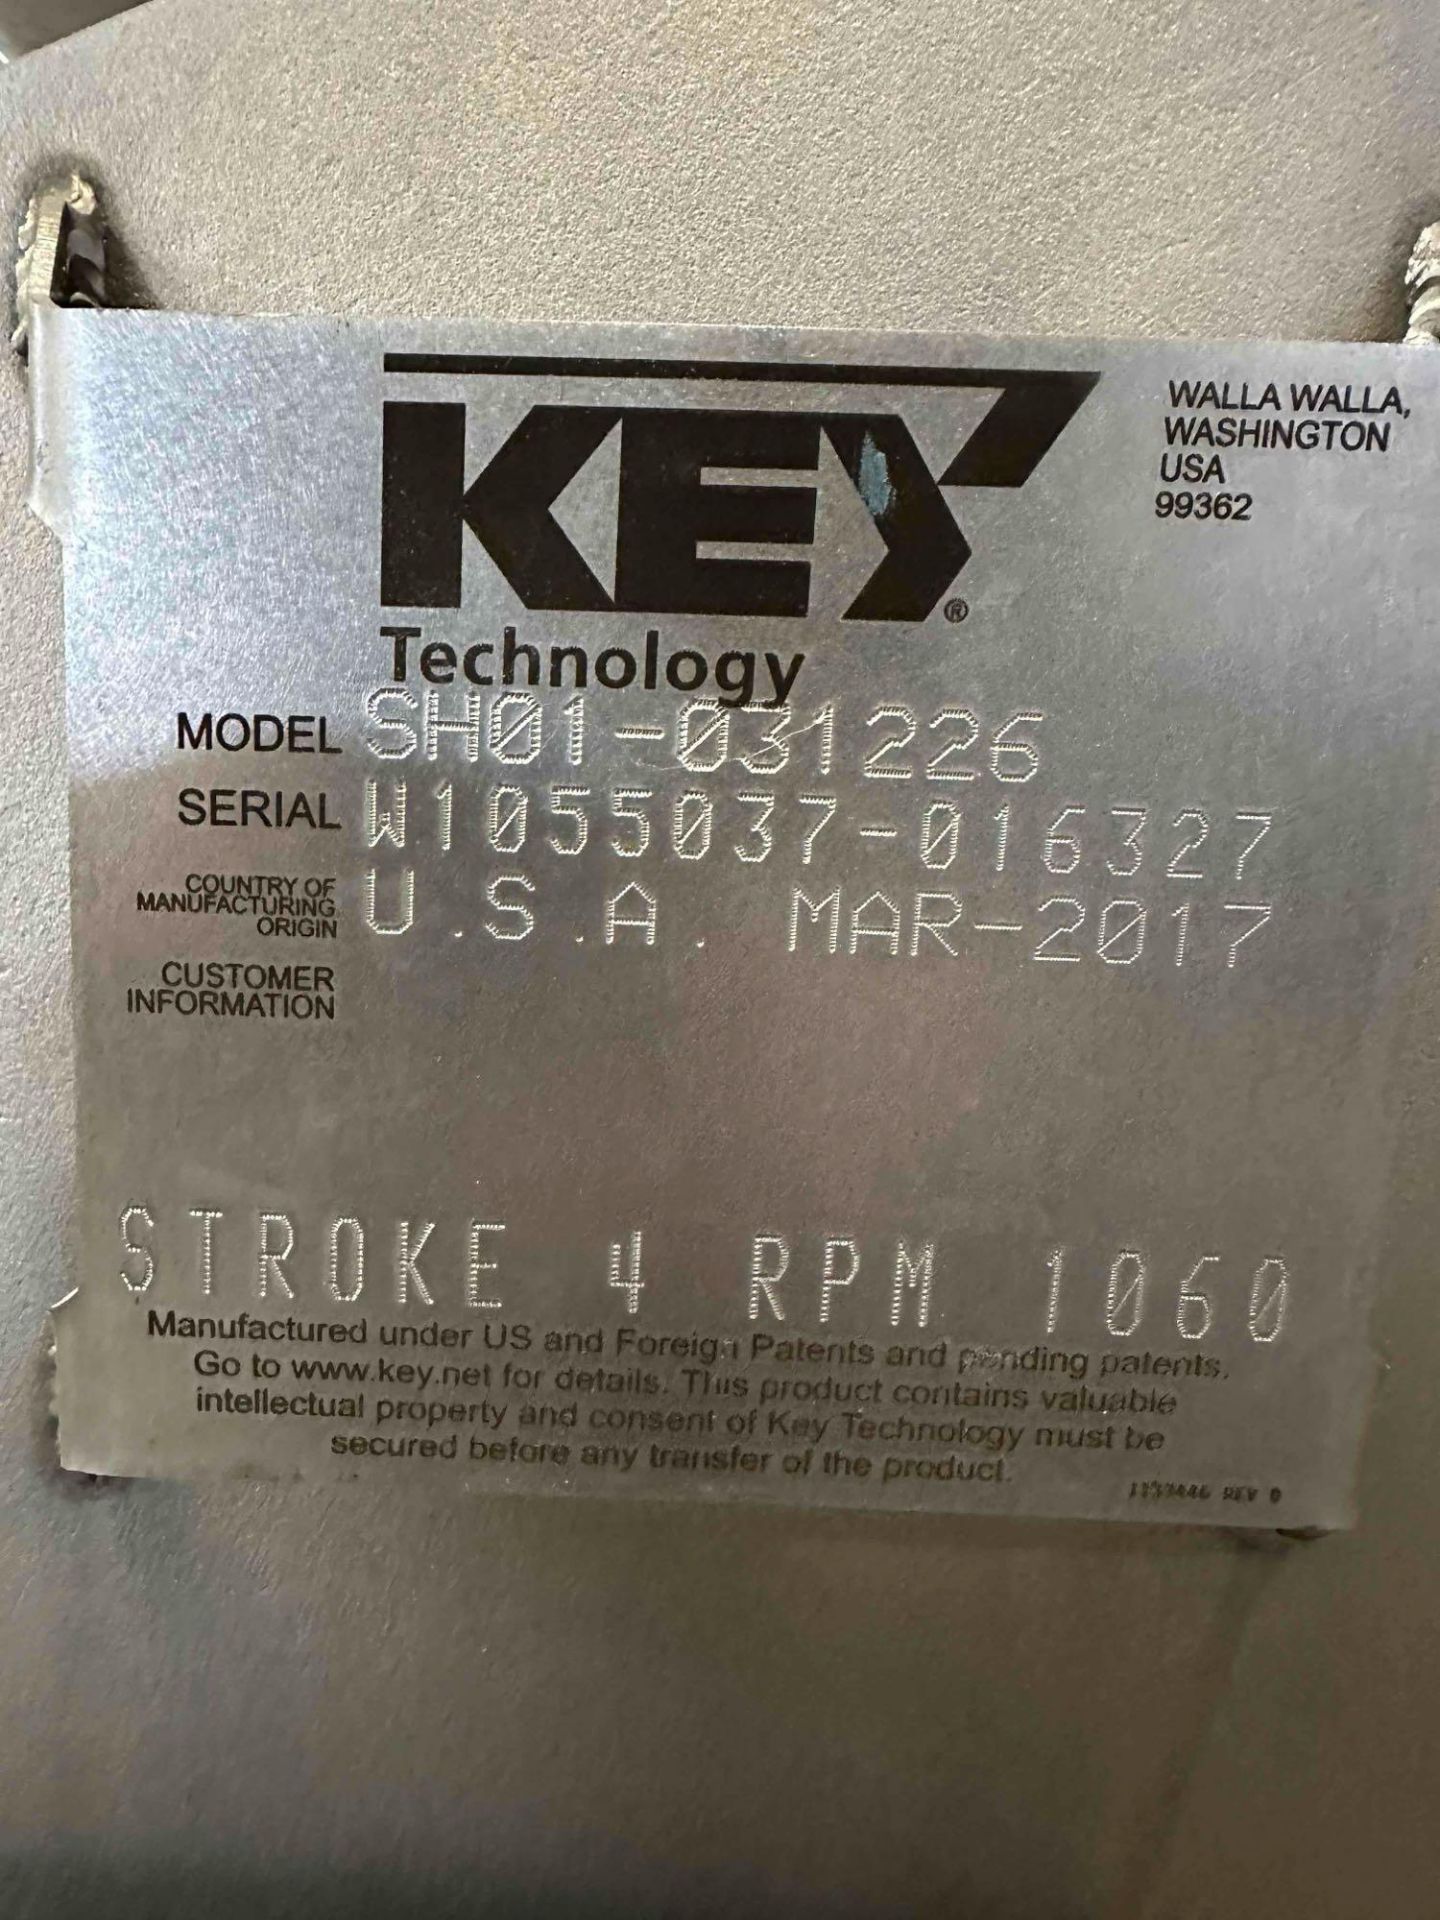 Key Technology SH01-031226 Stainless Steel Vibratory Slide Conveyor - Image 3 of 9